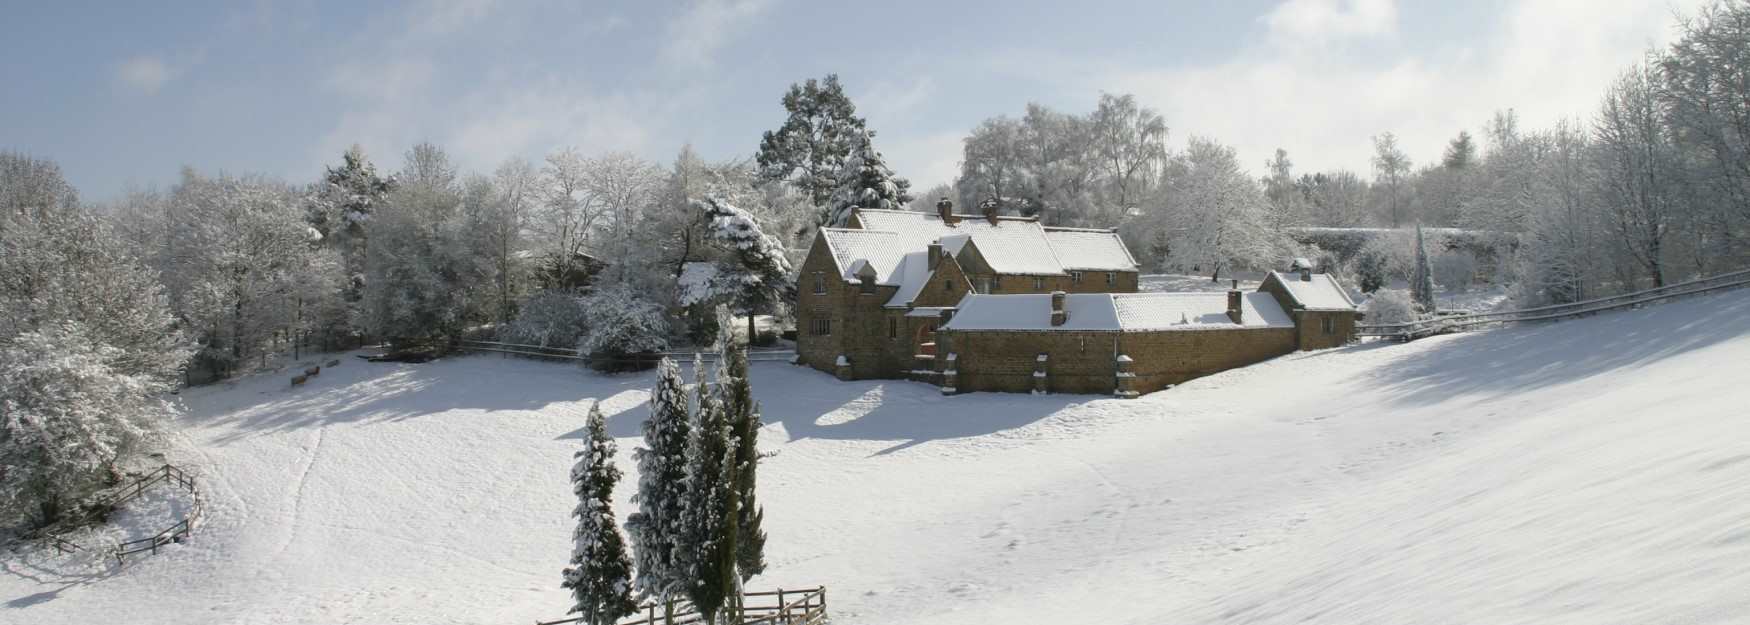 Heath Farm in the snow